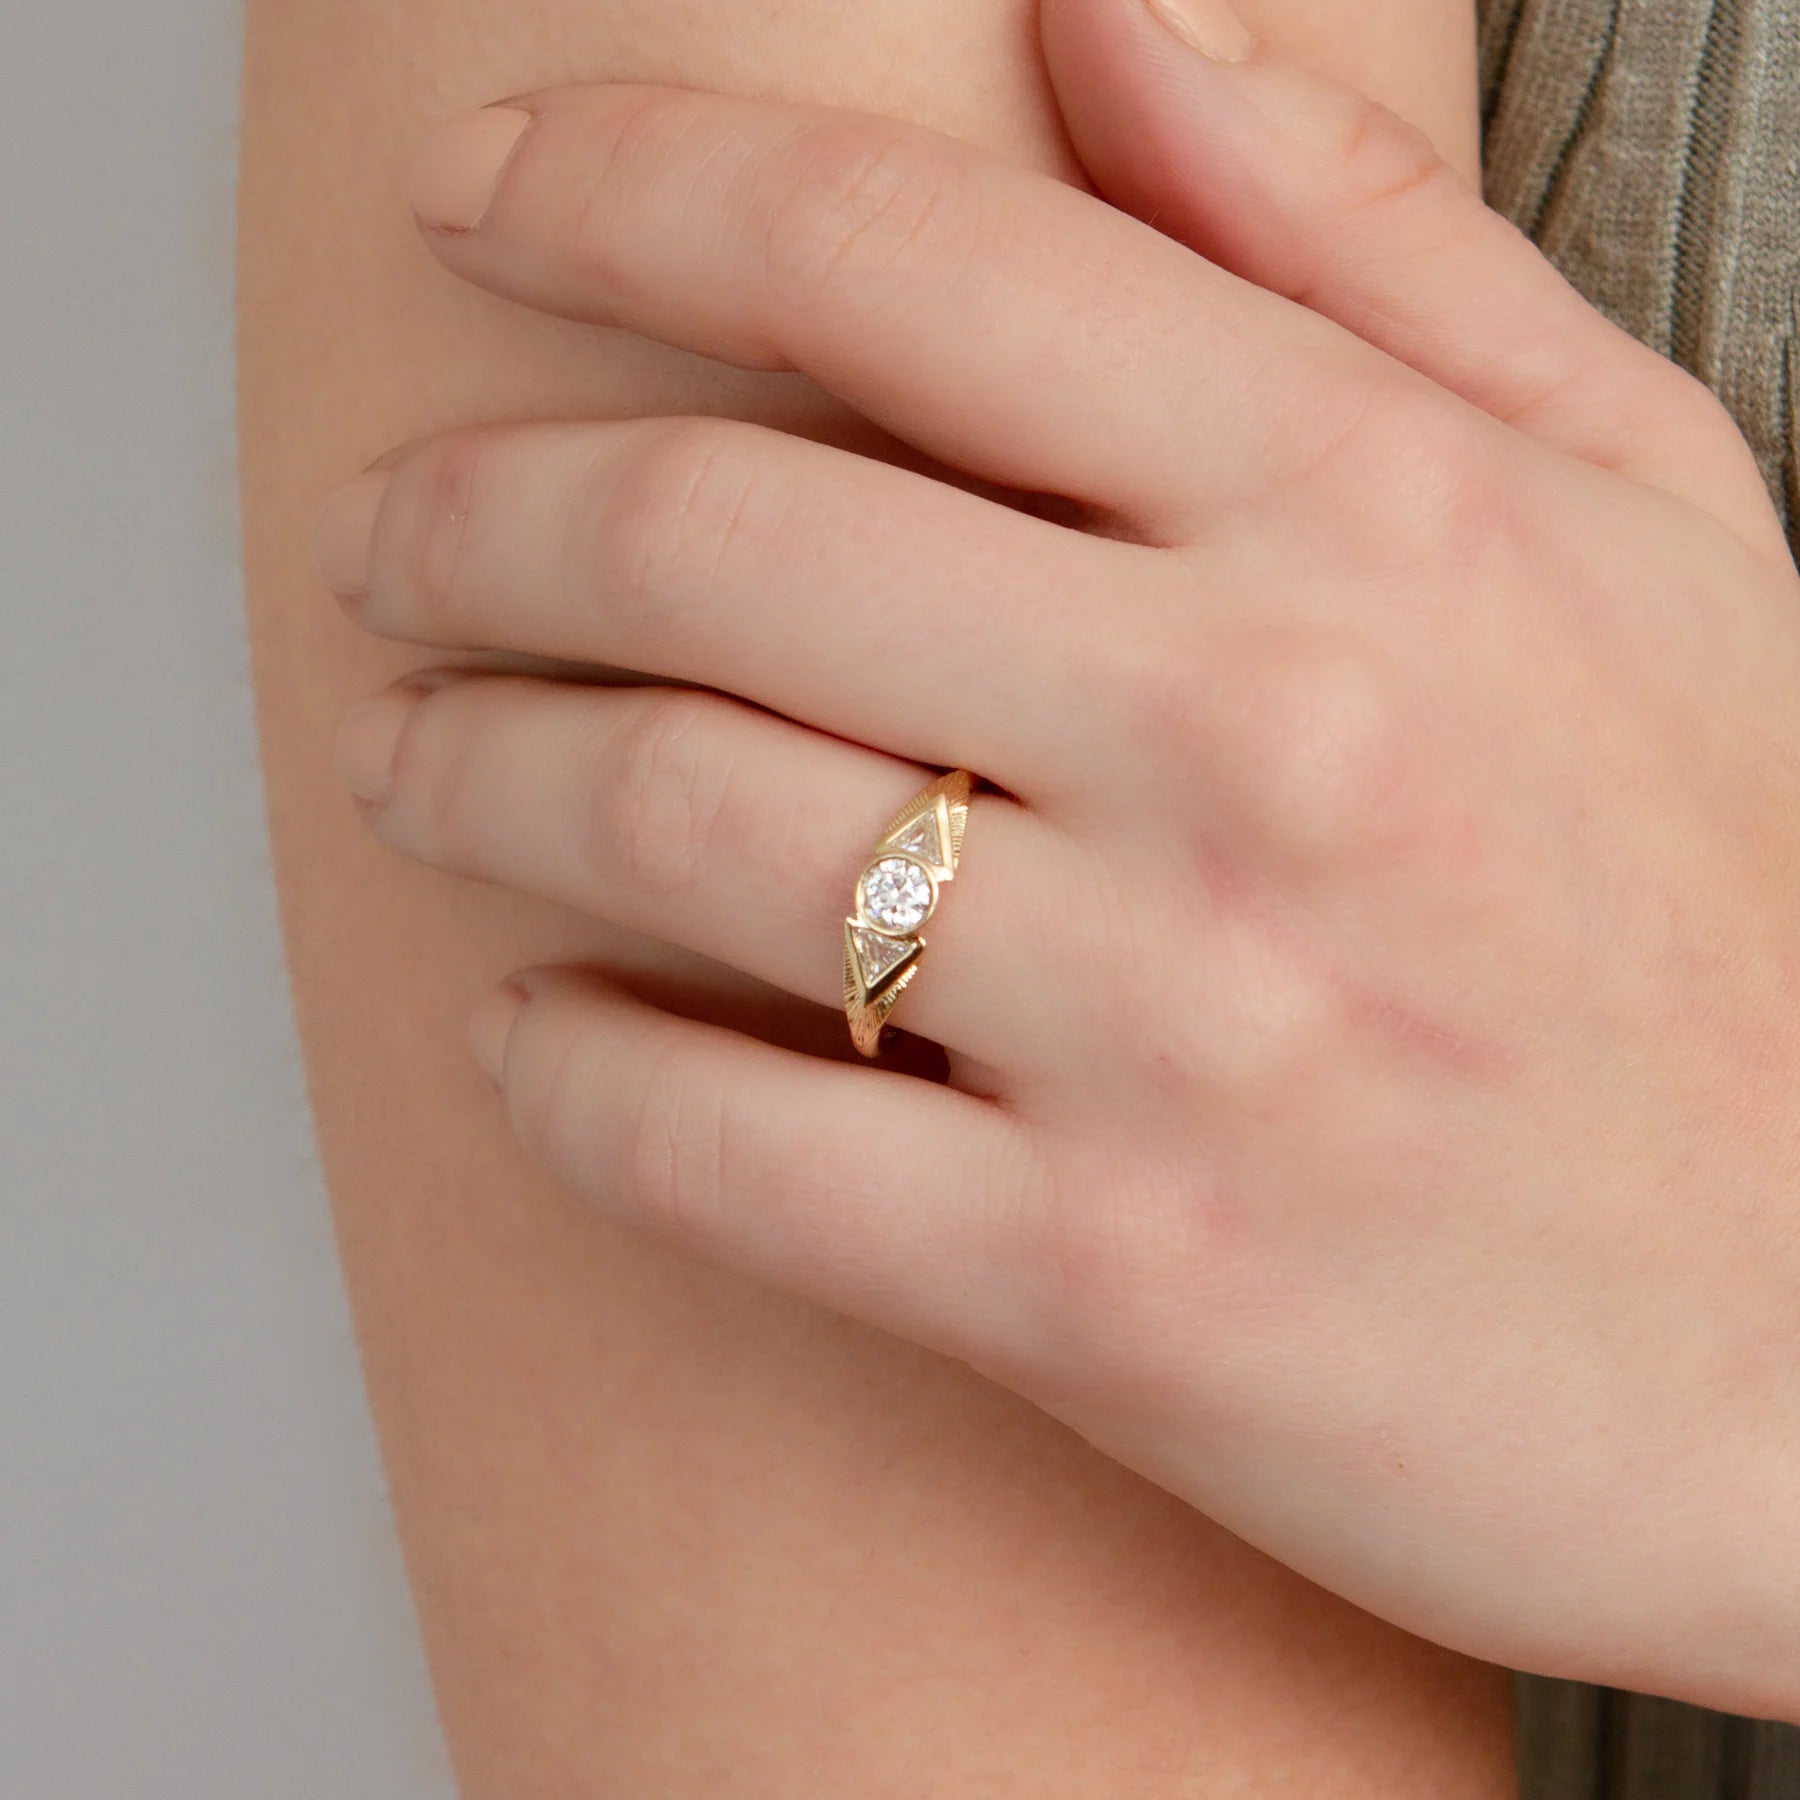 Athena Ring with Old European Cut Diamond